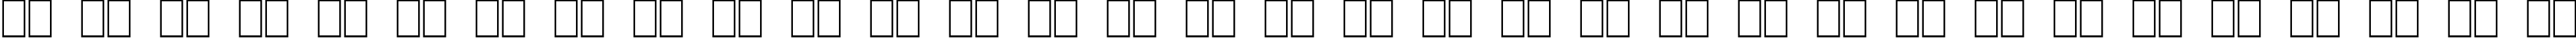 Пример написания русского алфавита шрифтом WP BoxDrawing